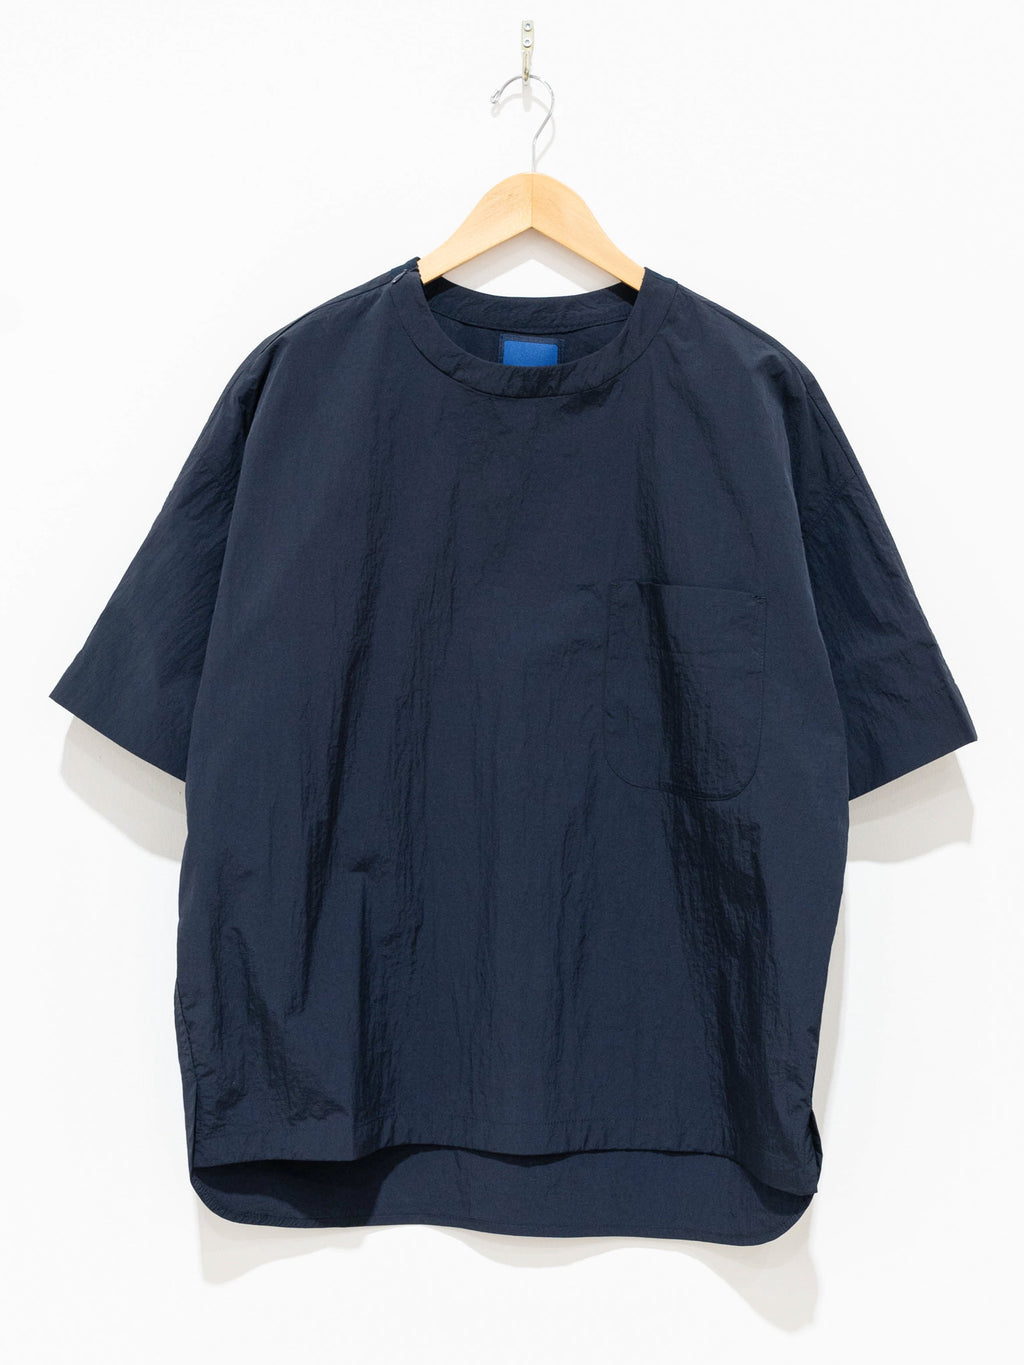 Namu Shop - Document Nylon Over Shirt - Navy